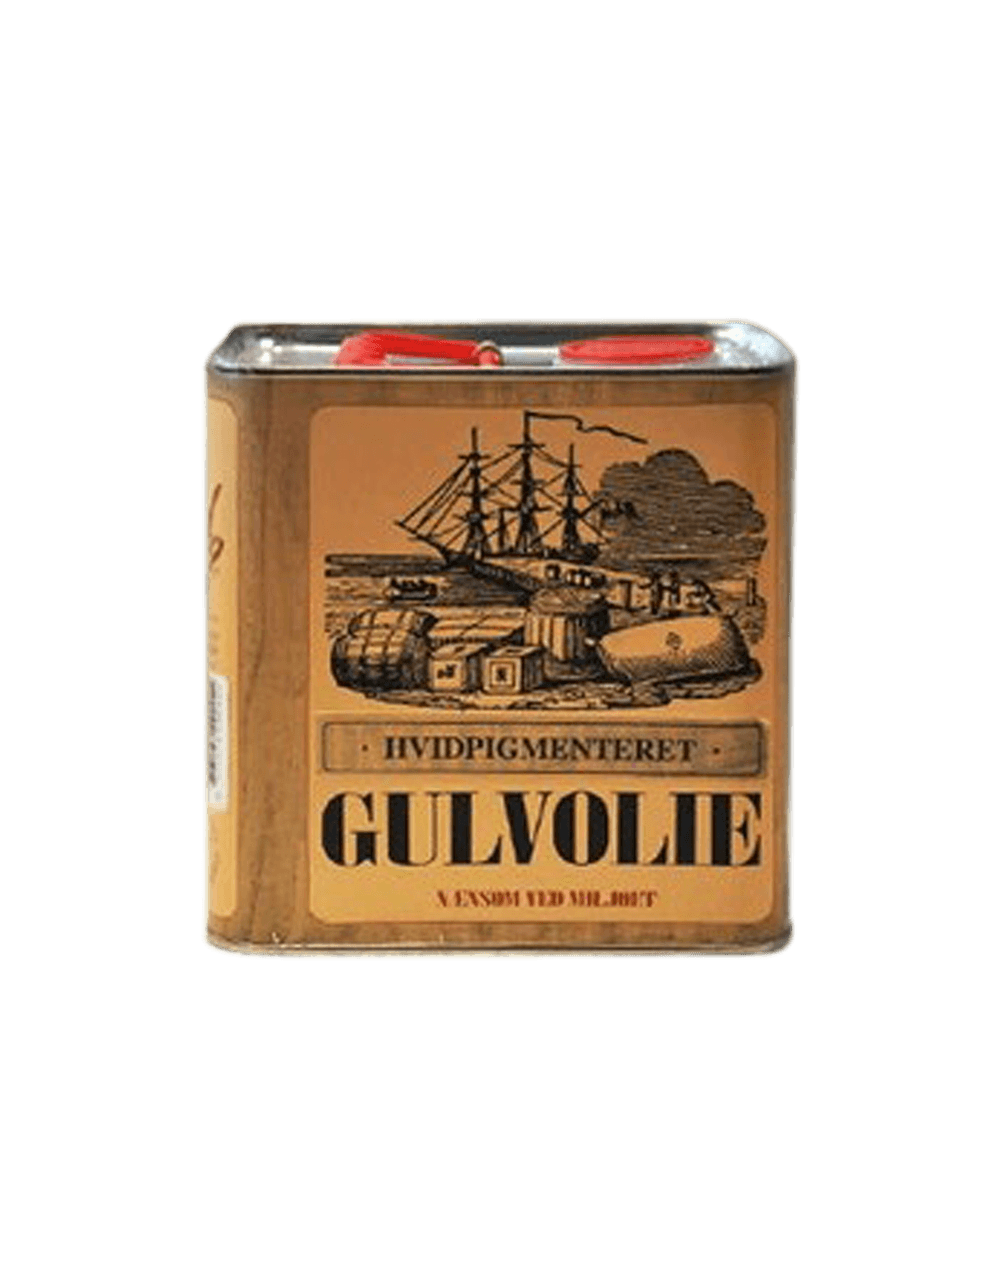 Gulvolie - Hvidpigmenteret